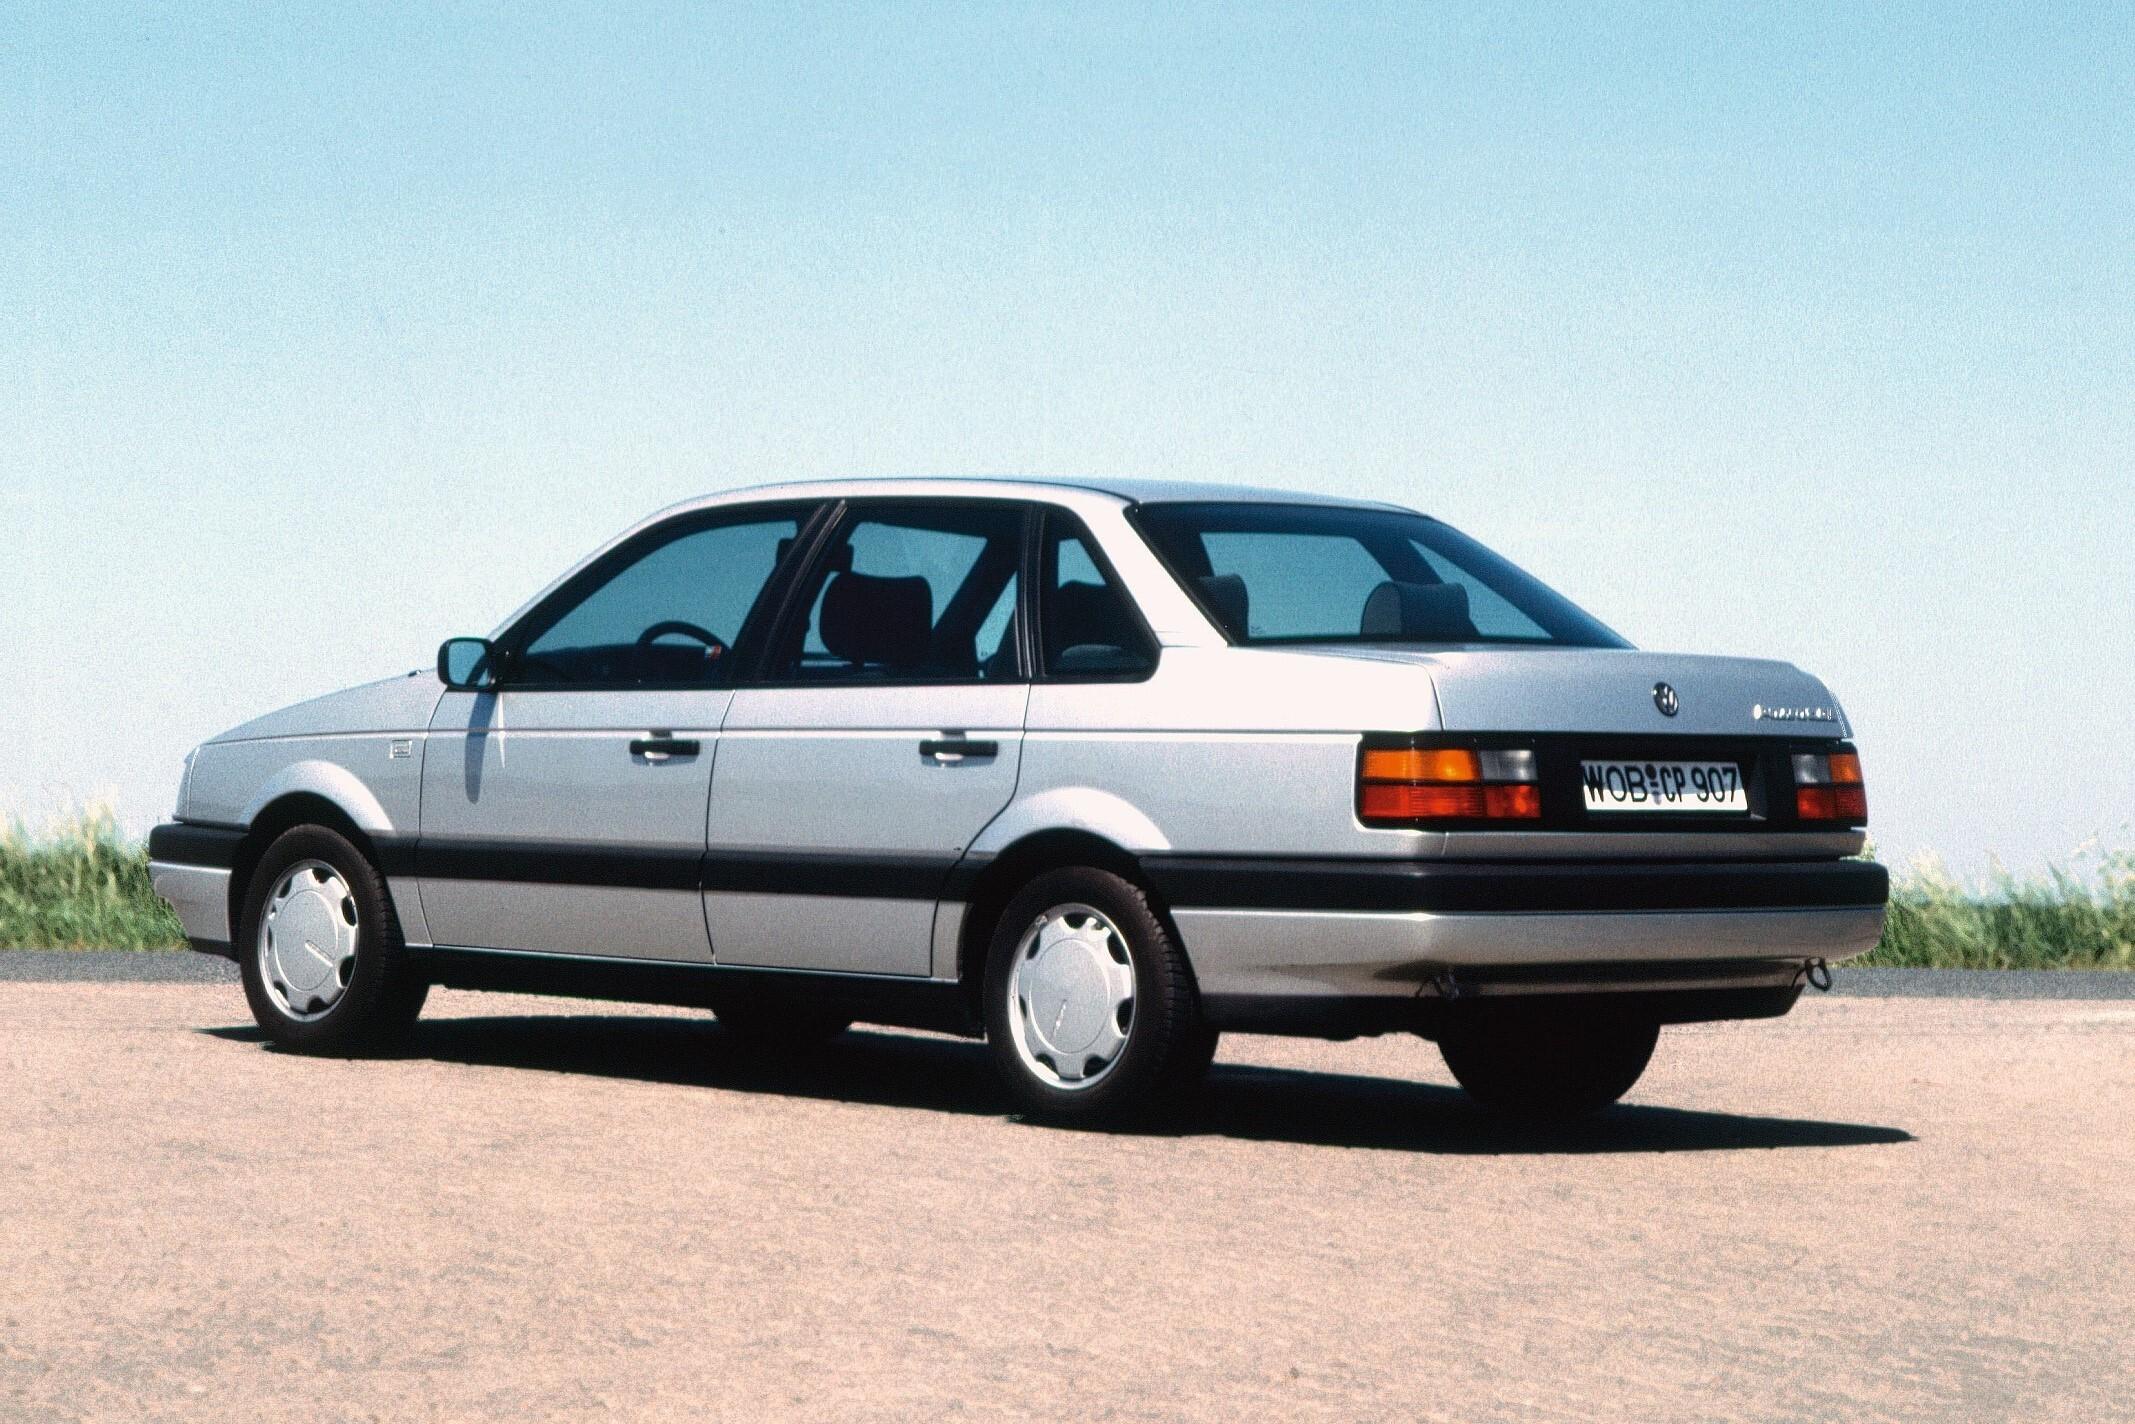 91 95 года. VW Passat b3 седан. Фольксваген Пассат б3 седан. Volkswagen Passat b3 седан 1.8. Volkswagen Passat b3 седан 1990.